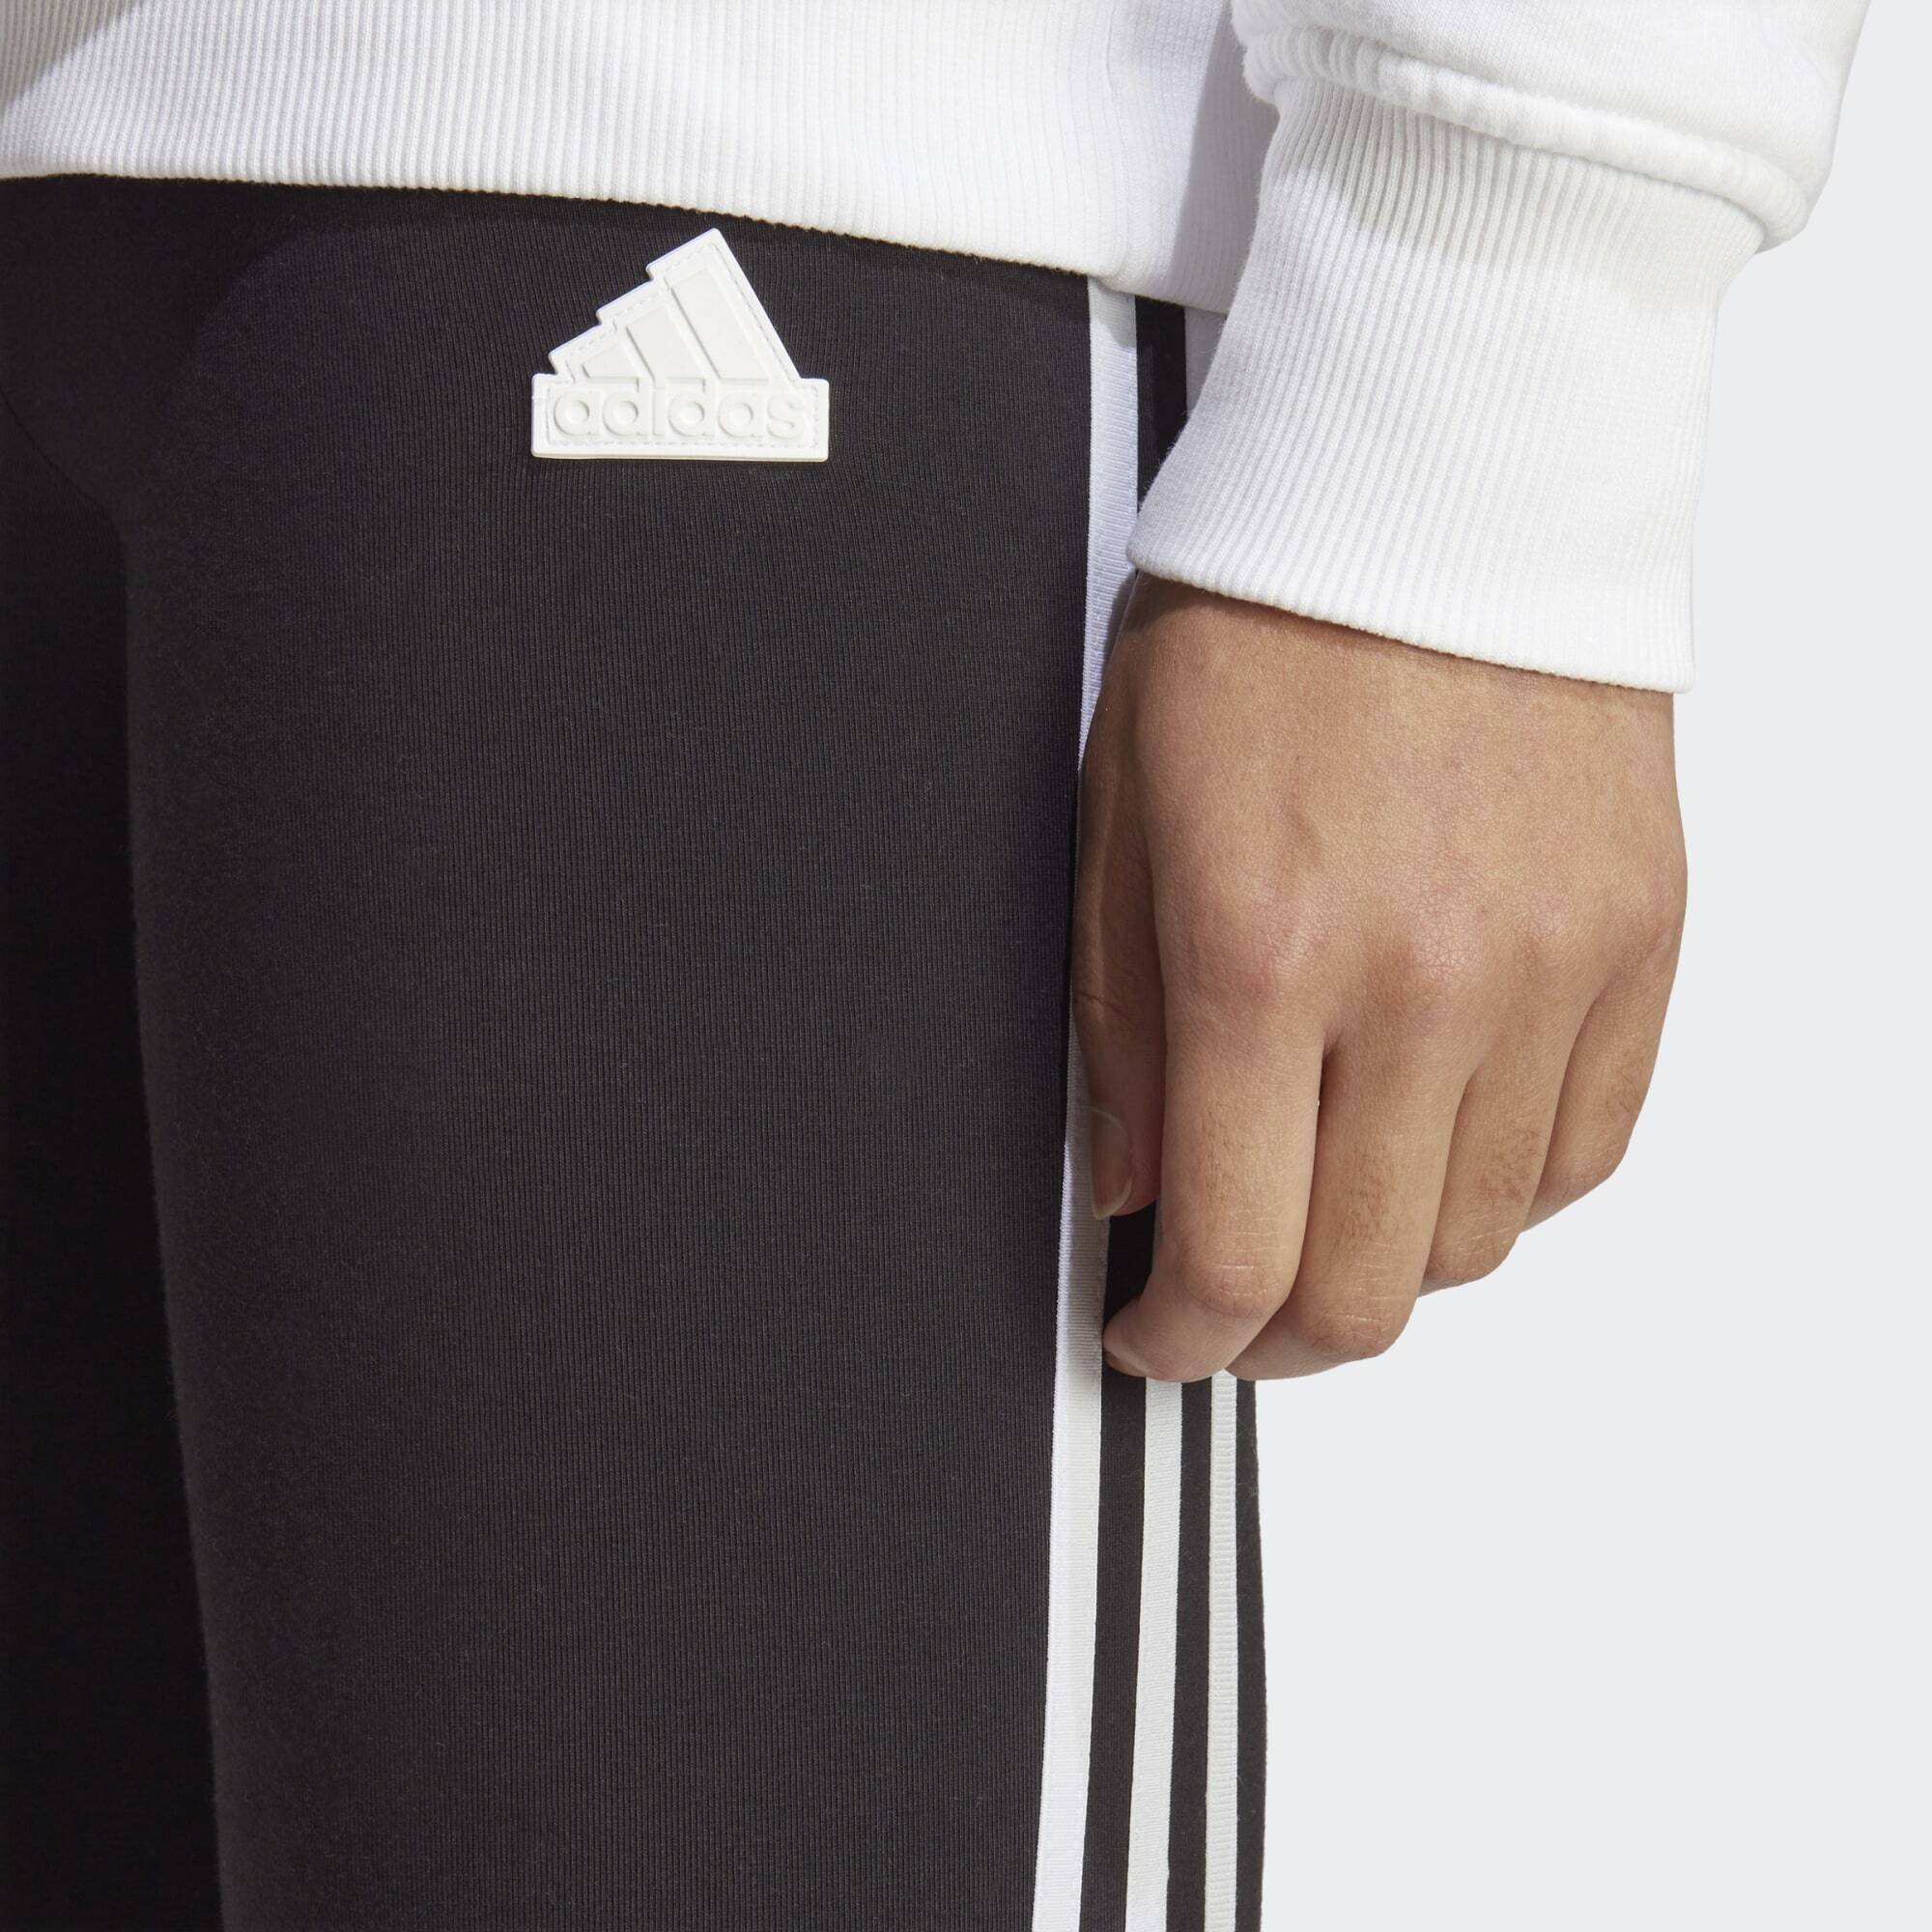 weiß / Sportswear ICONS FUTURE adidas LEGGINGS Leggings 3-STREIFEN schwarz